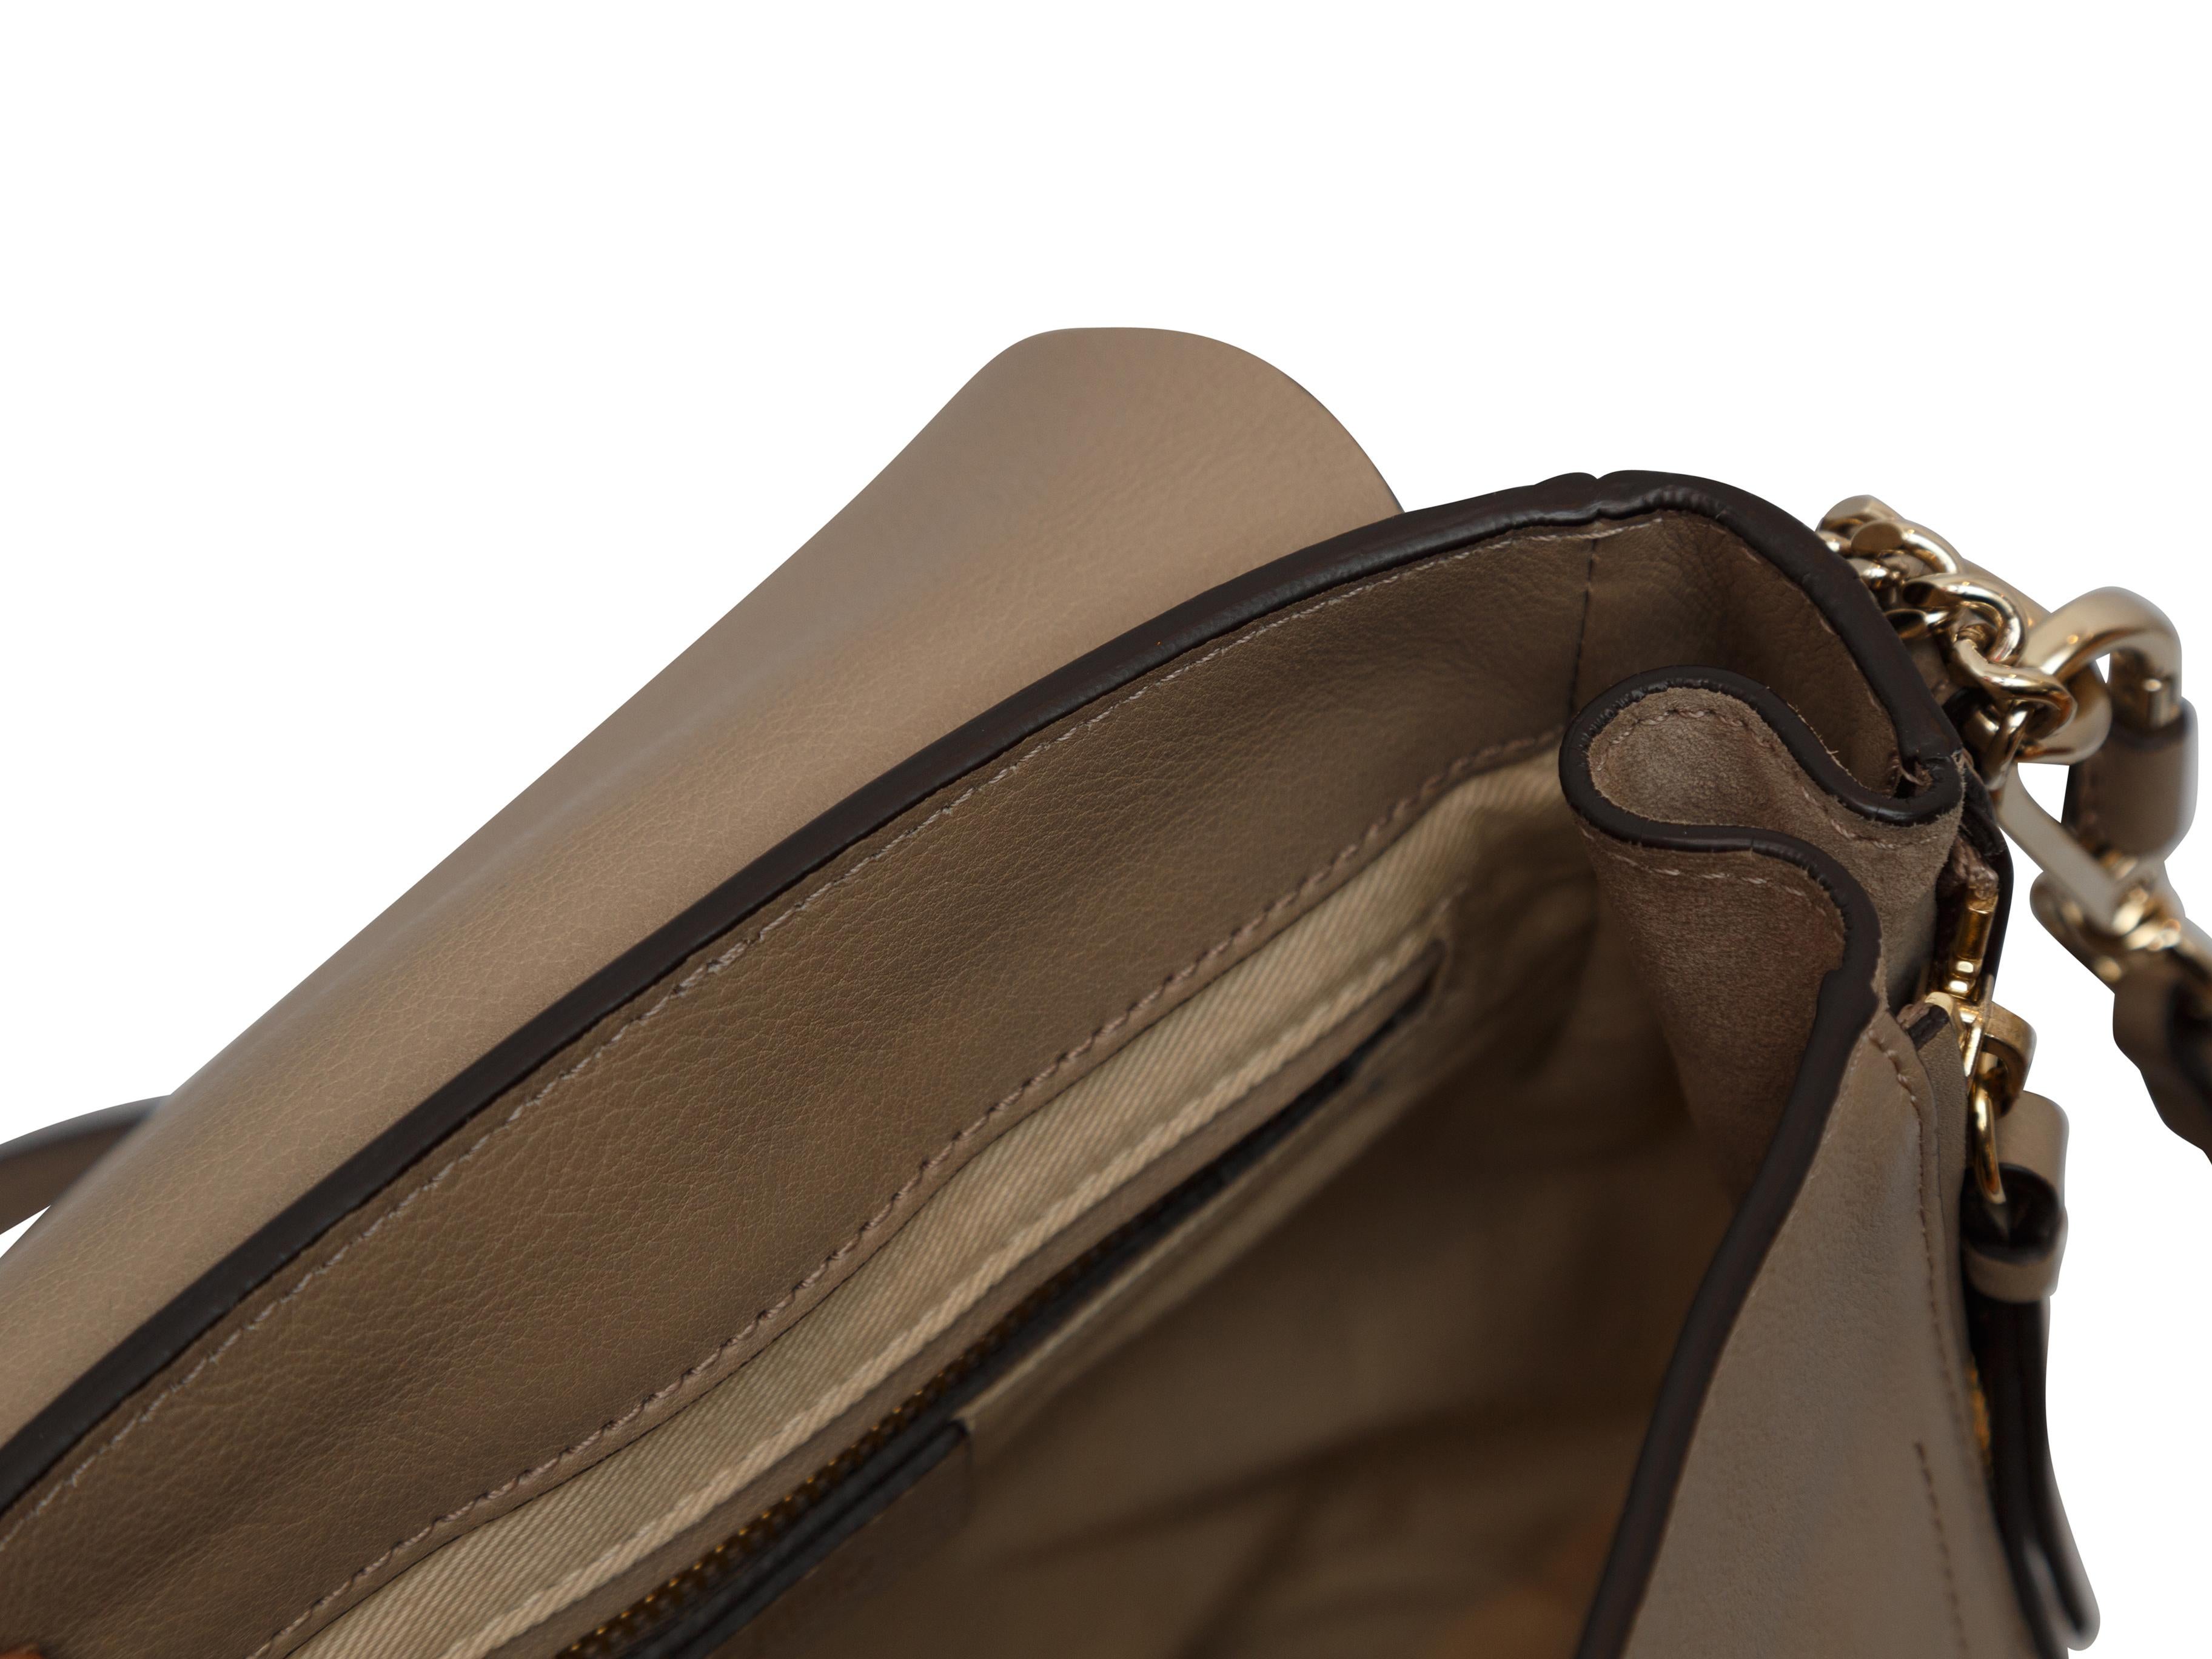 Product details: Taupe leather Medium Faye backpack by Chloe. Interior zip pocket. Gold-tone hardware. Adjustable shoulder straps. 8.5